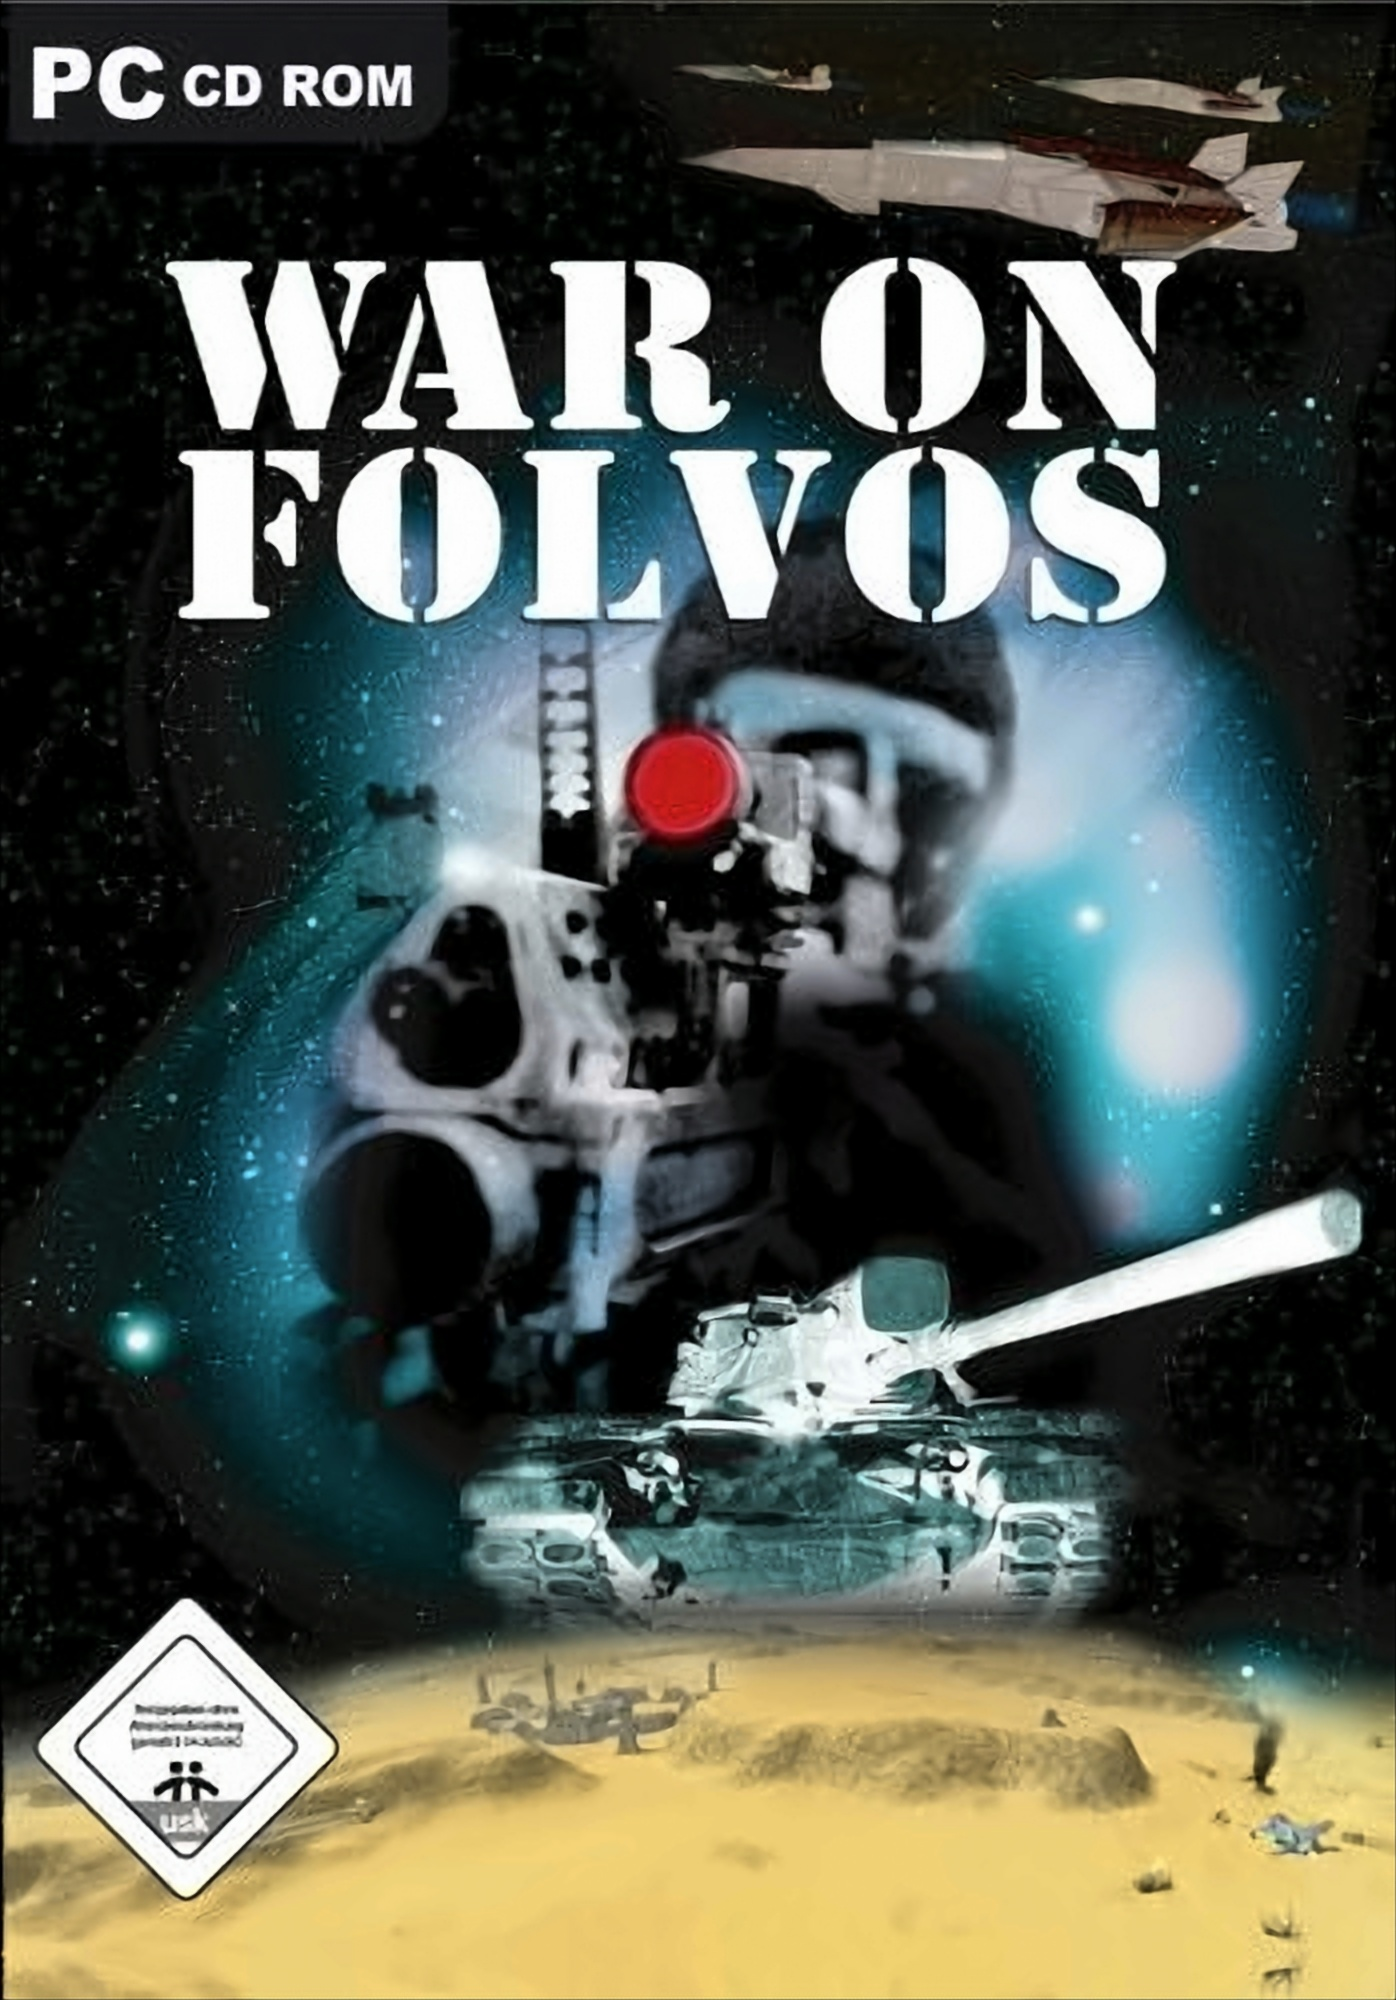 On [PC] Folvos - War